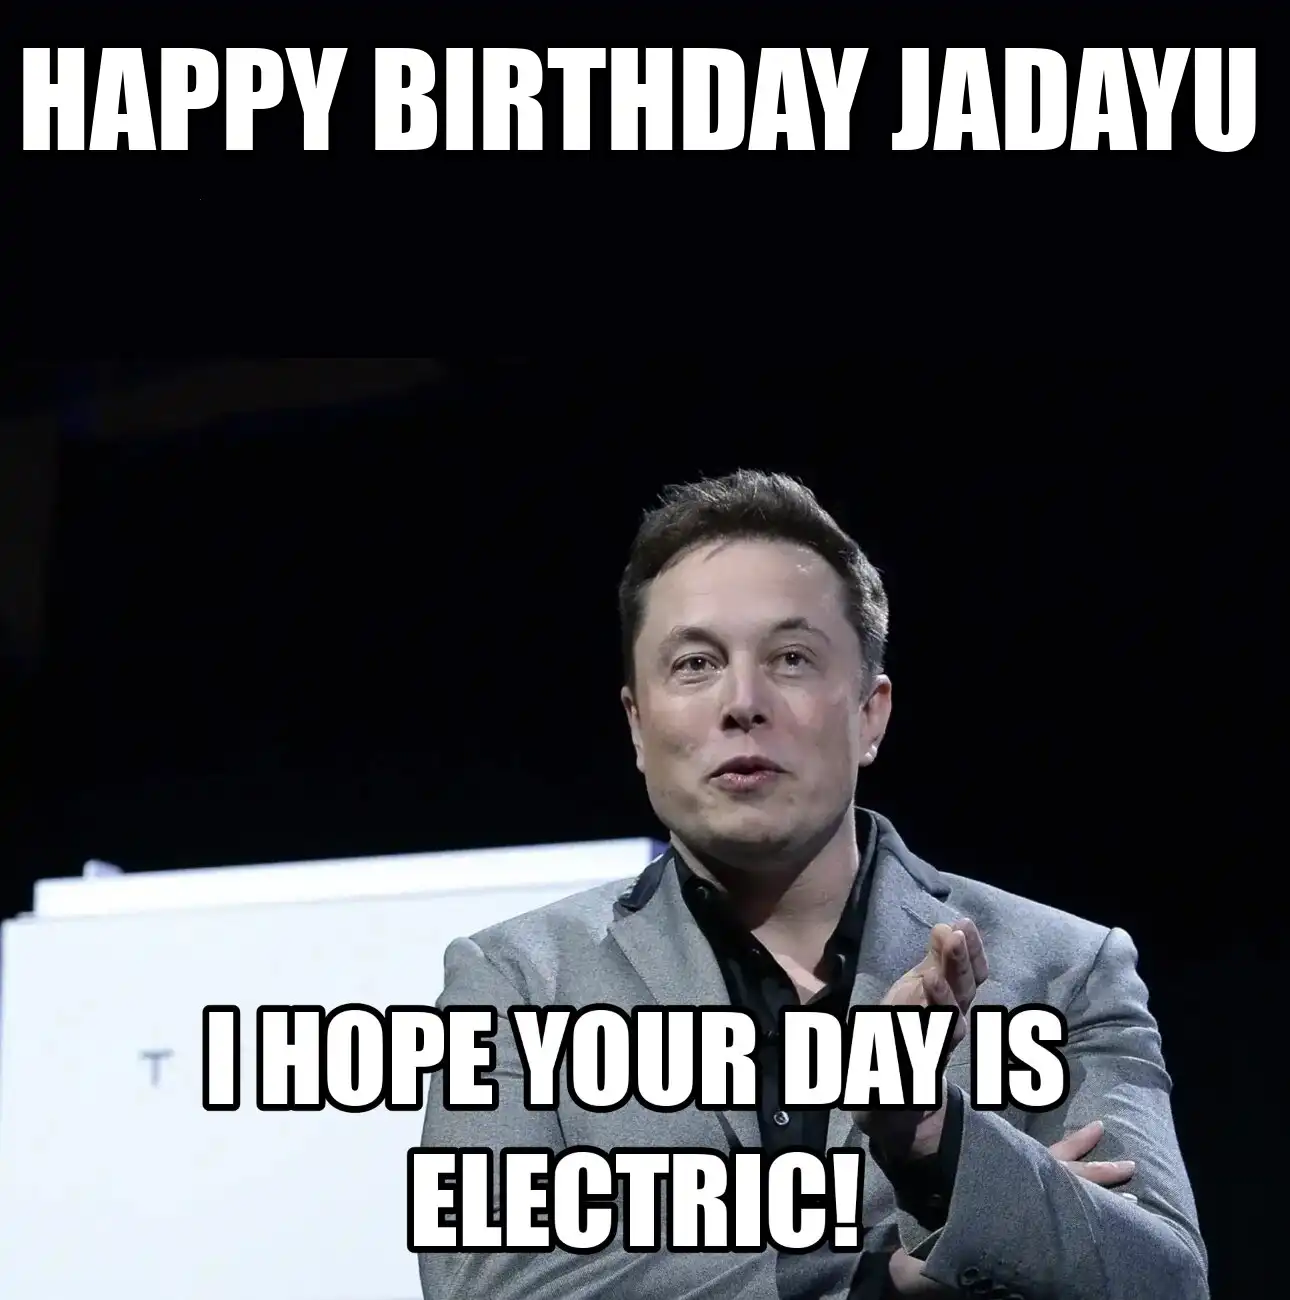 Happy Birthday Jadayu I Hope Your Day Is Electric Meme